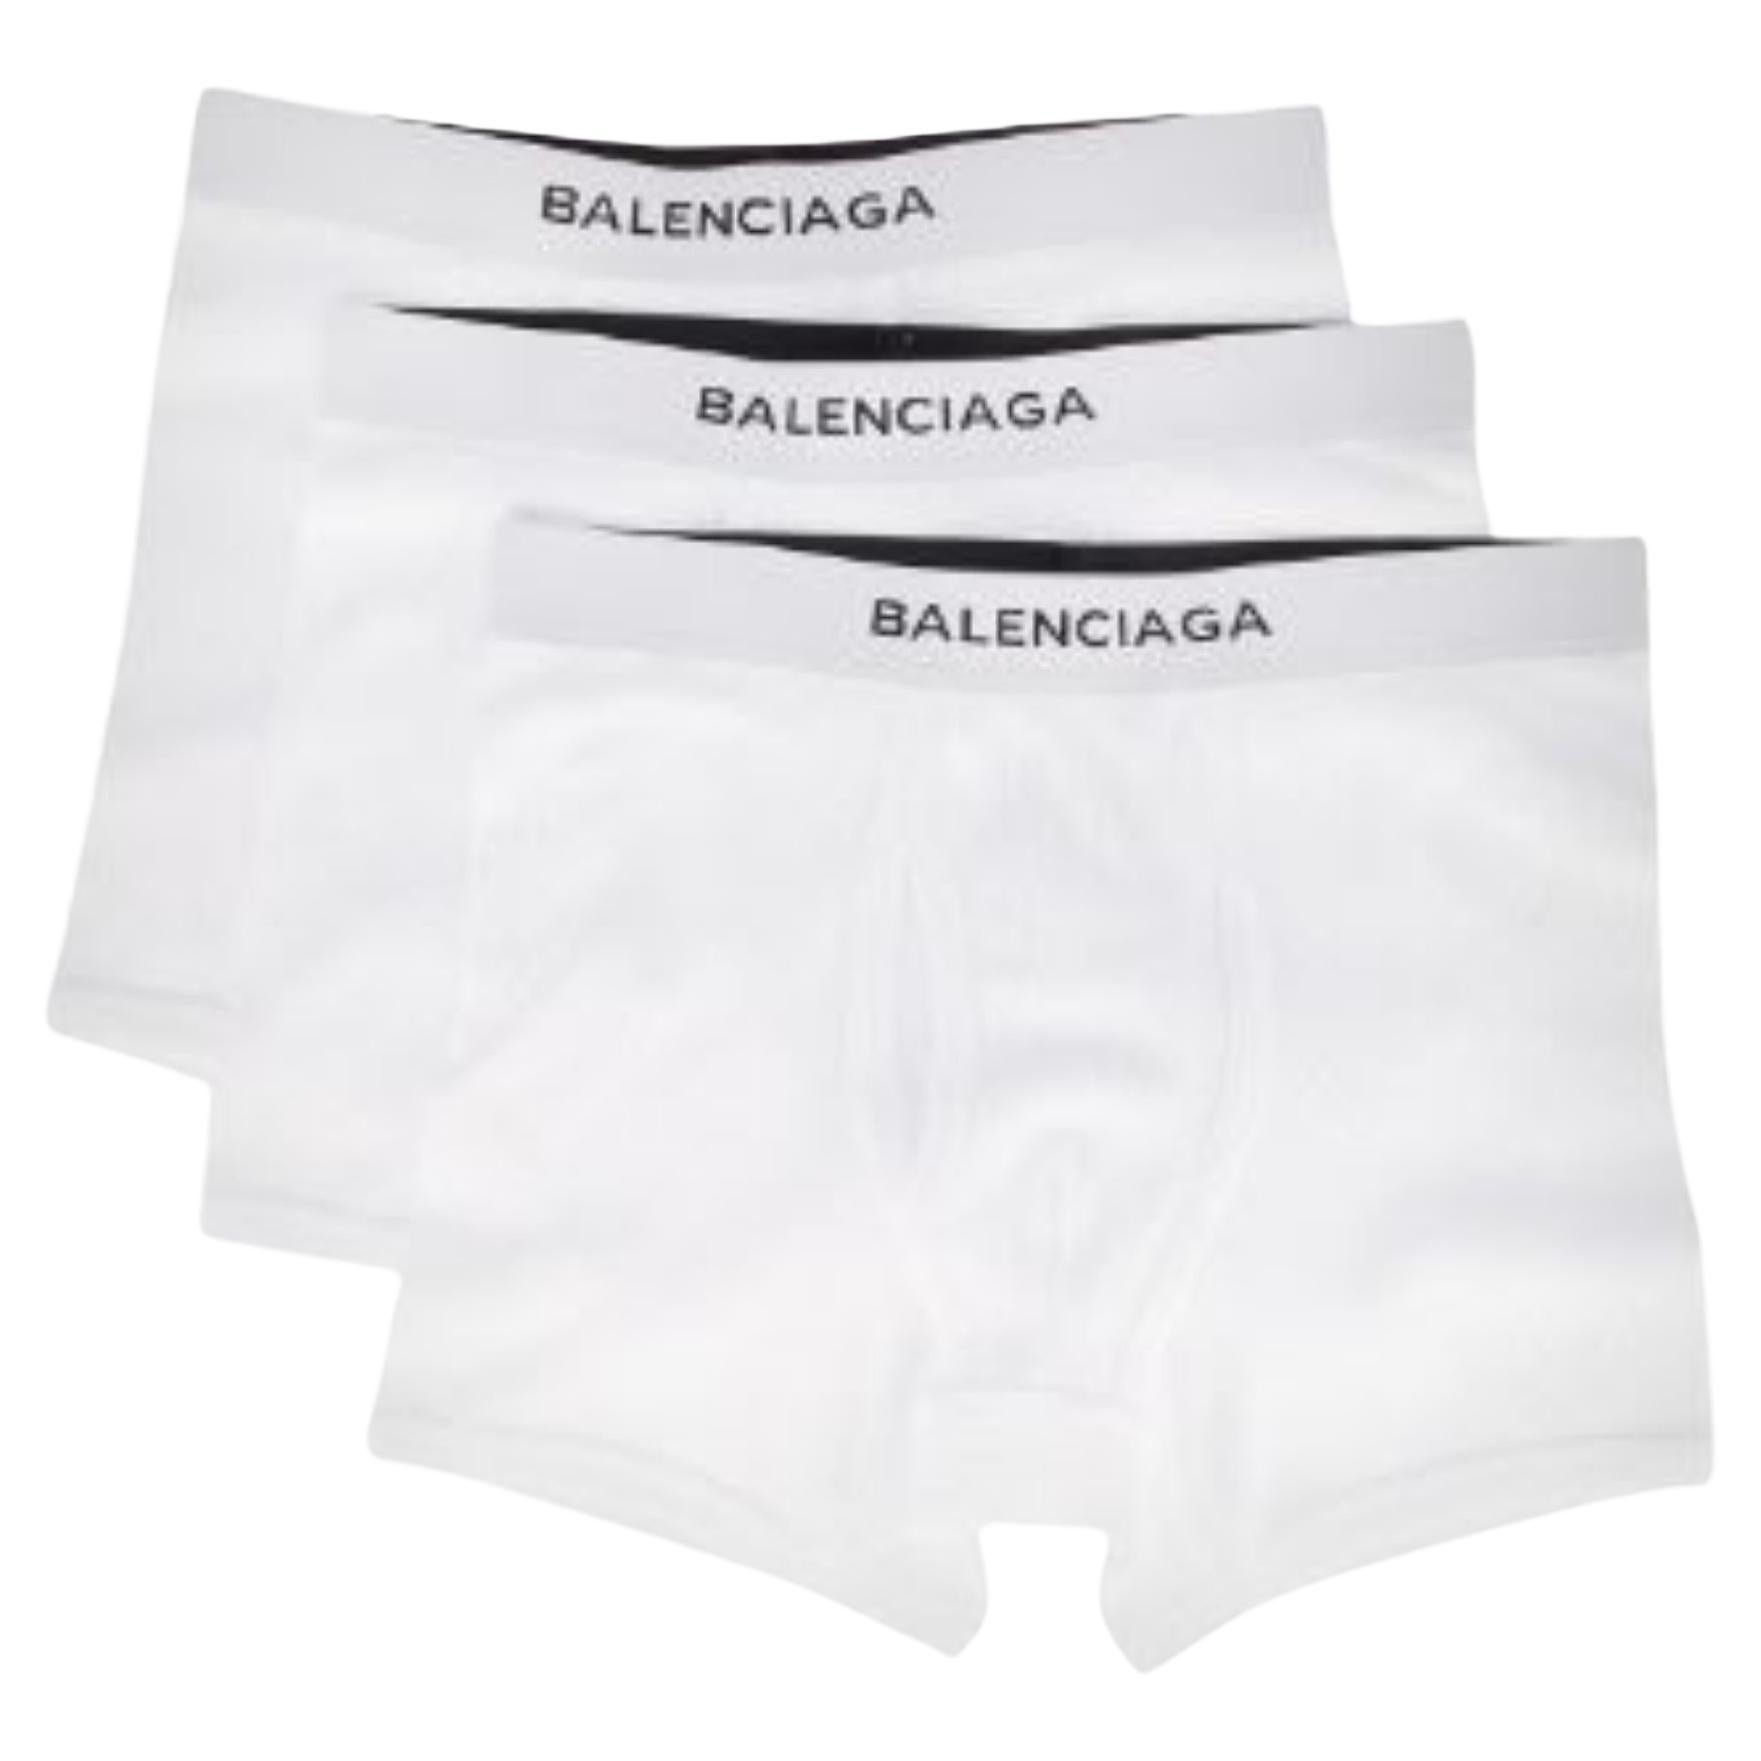 Balenciaga Power of Dreams Classic Logo White Boxers (Small) 3 set